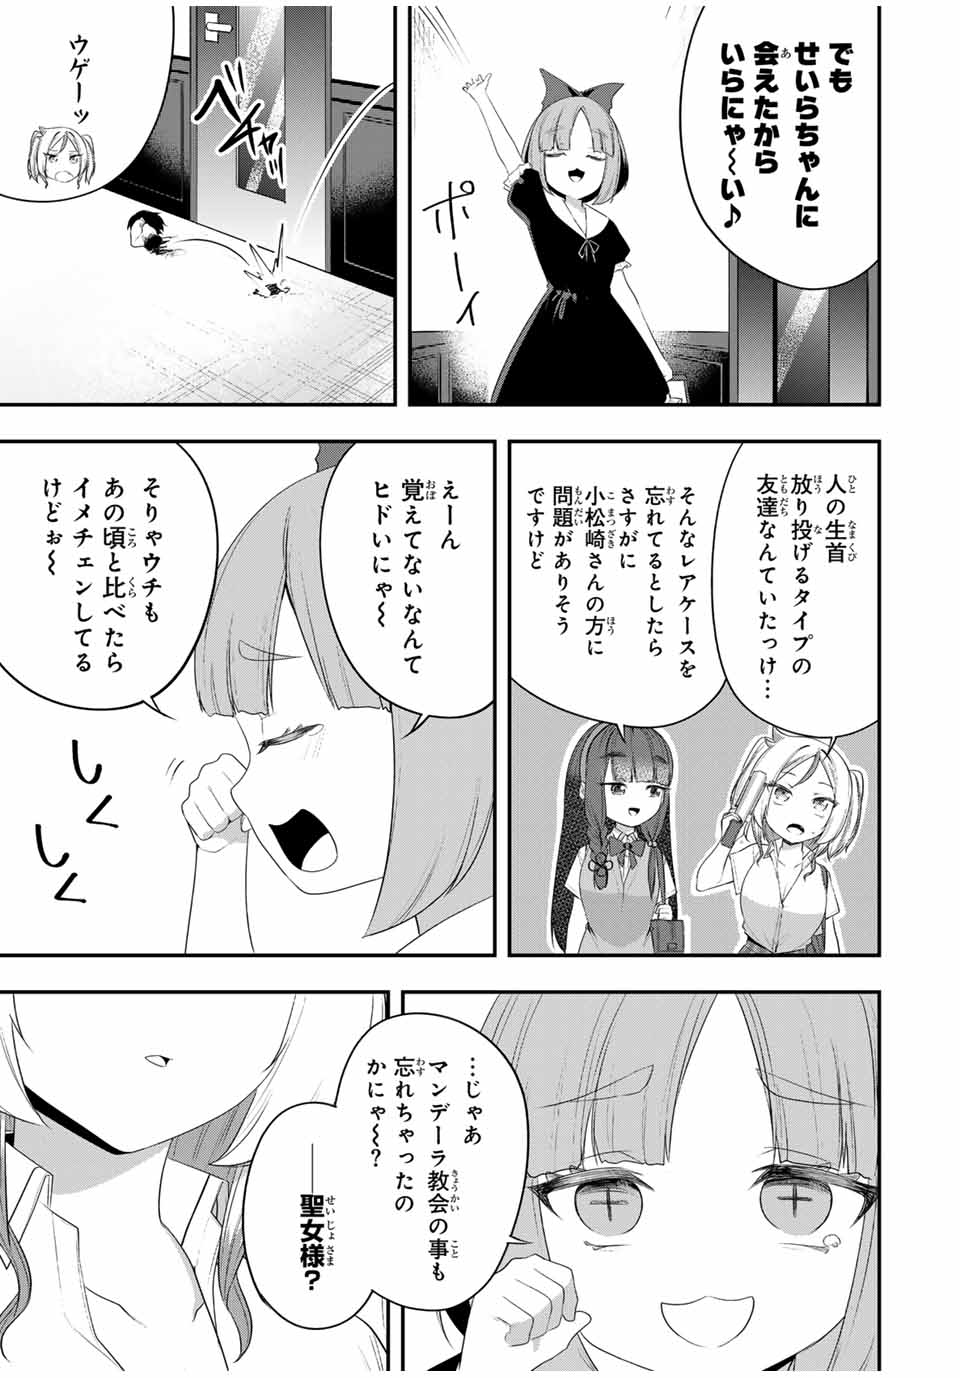 Heroine wa xx Okasegitai - Chapter 14 - Page 7